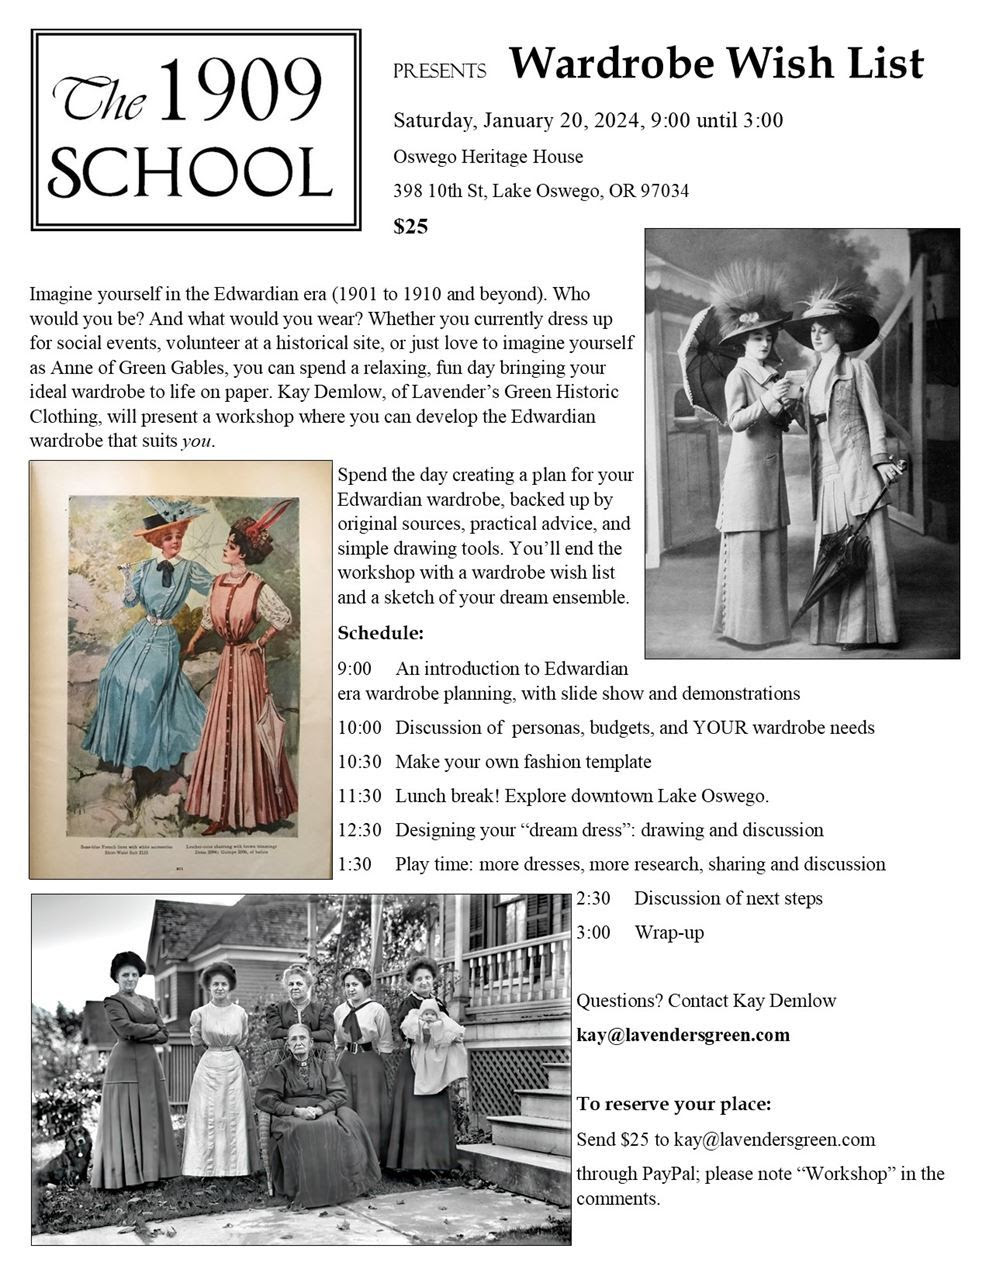 The 1909 School presents Wardrobe Wish List on Saturday, January 20, 2024, 9:00 AM - 3:00 PM by Kay Demlow